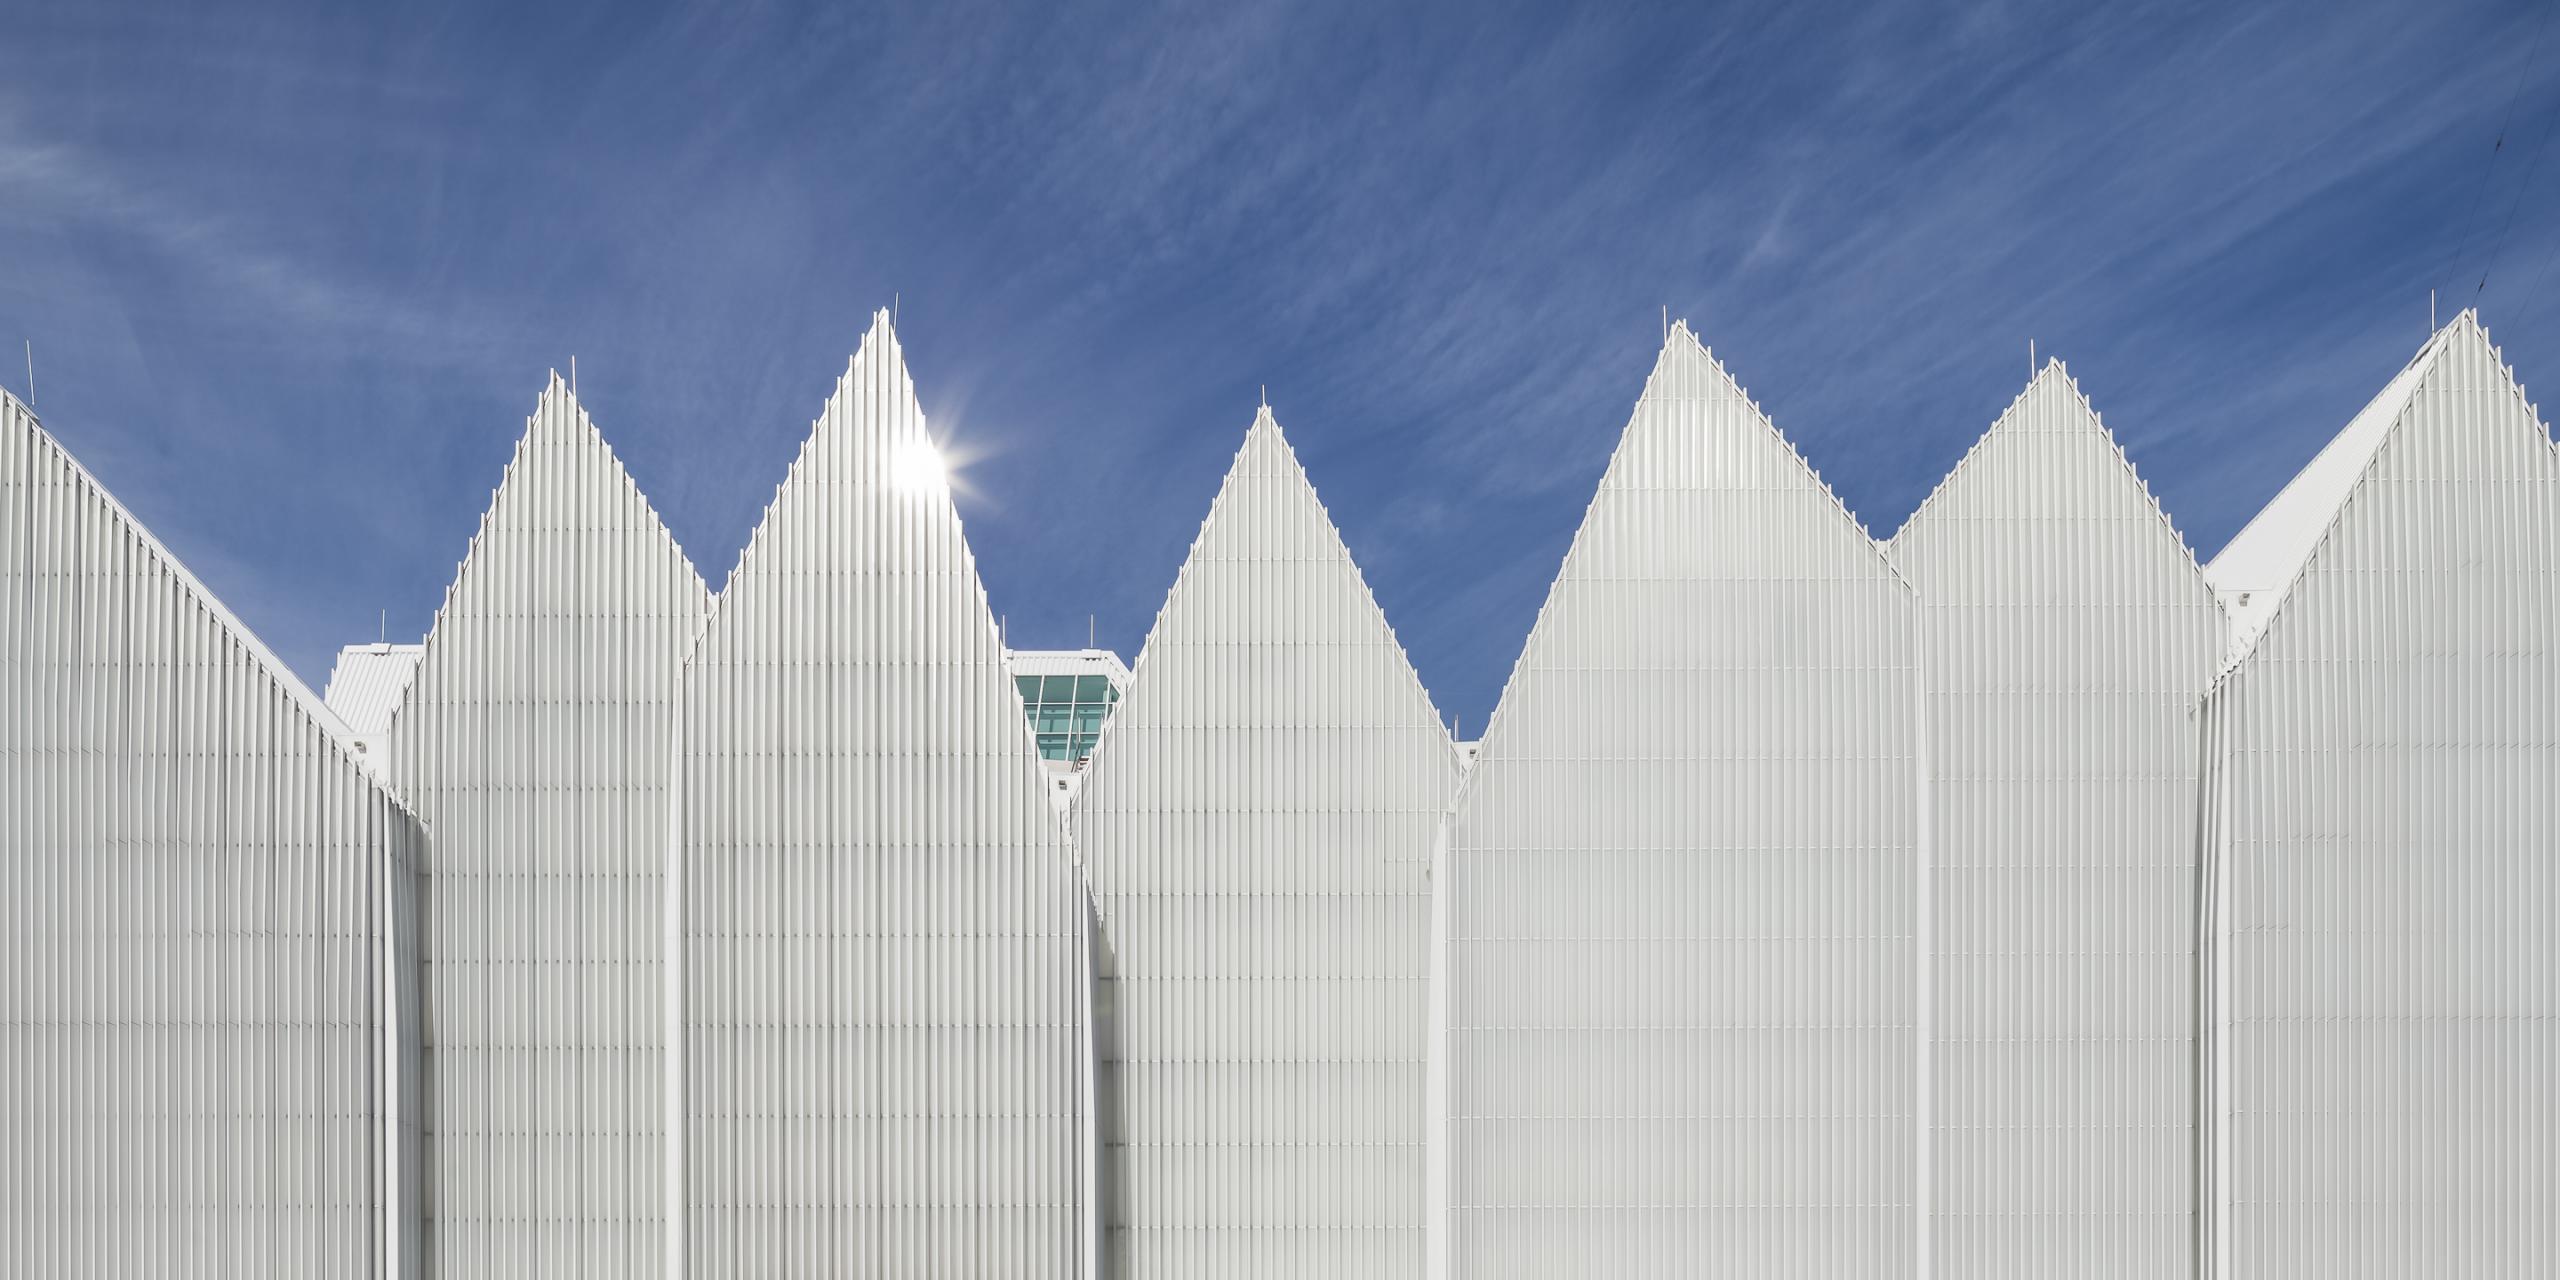 Photograph of Szczecin Philharmonic Hall, designed by Estudio Barozzi Veiga and located in Szczecin, Poland